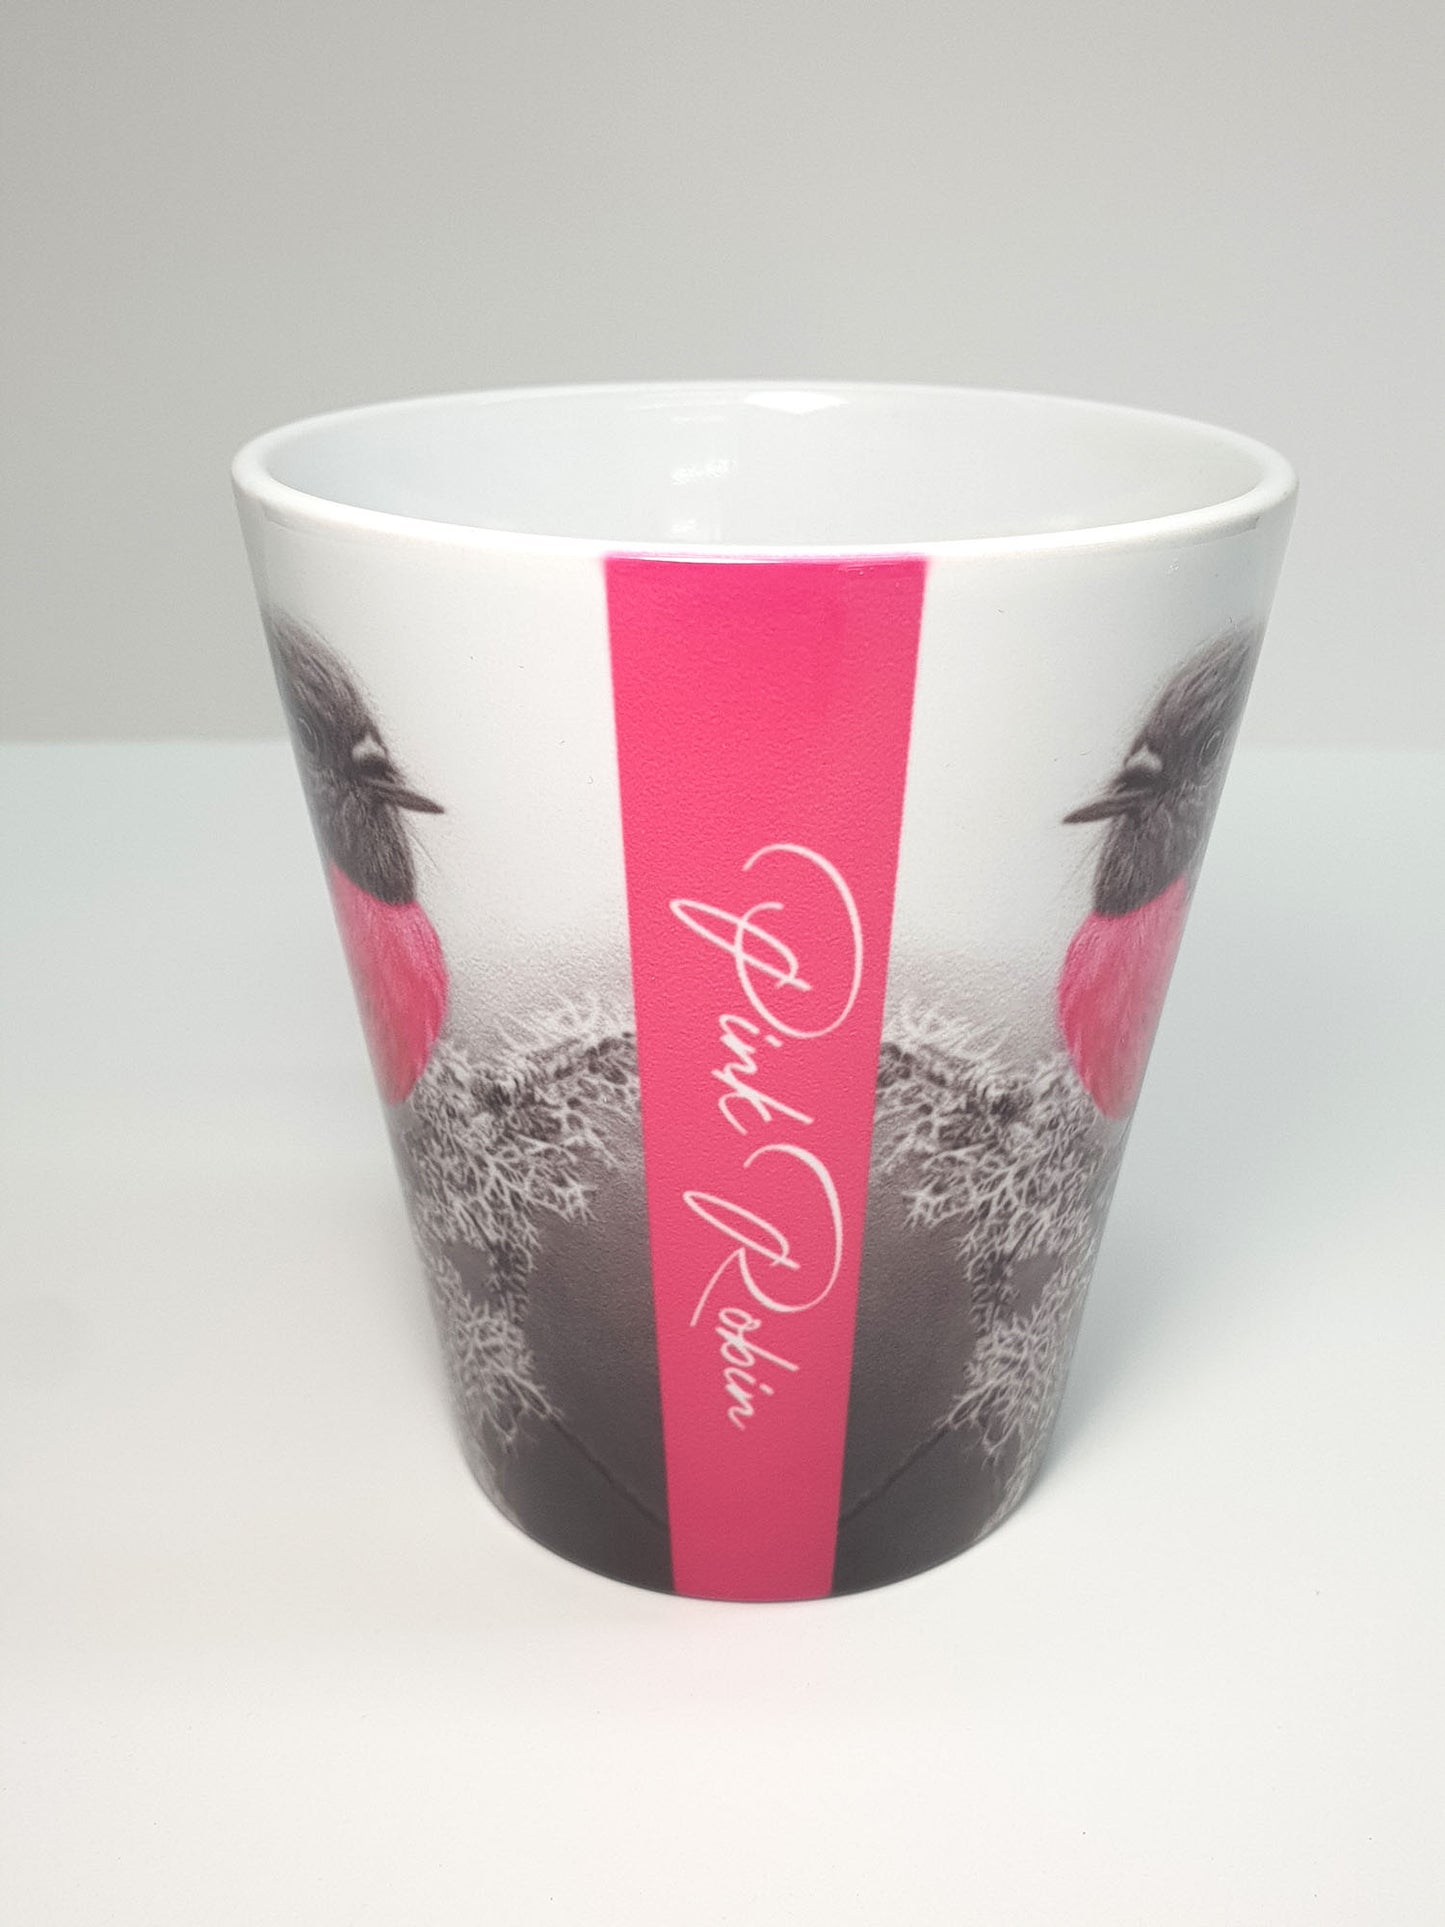 'Pink Robin' ceramic mug